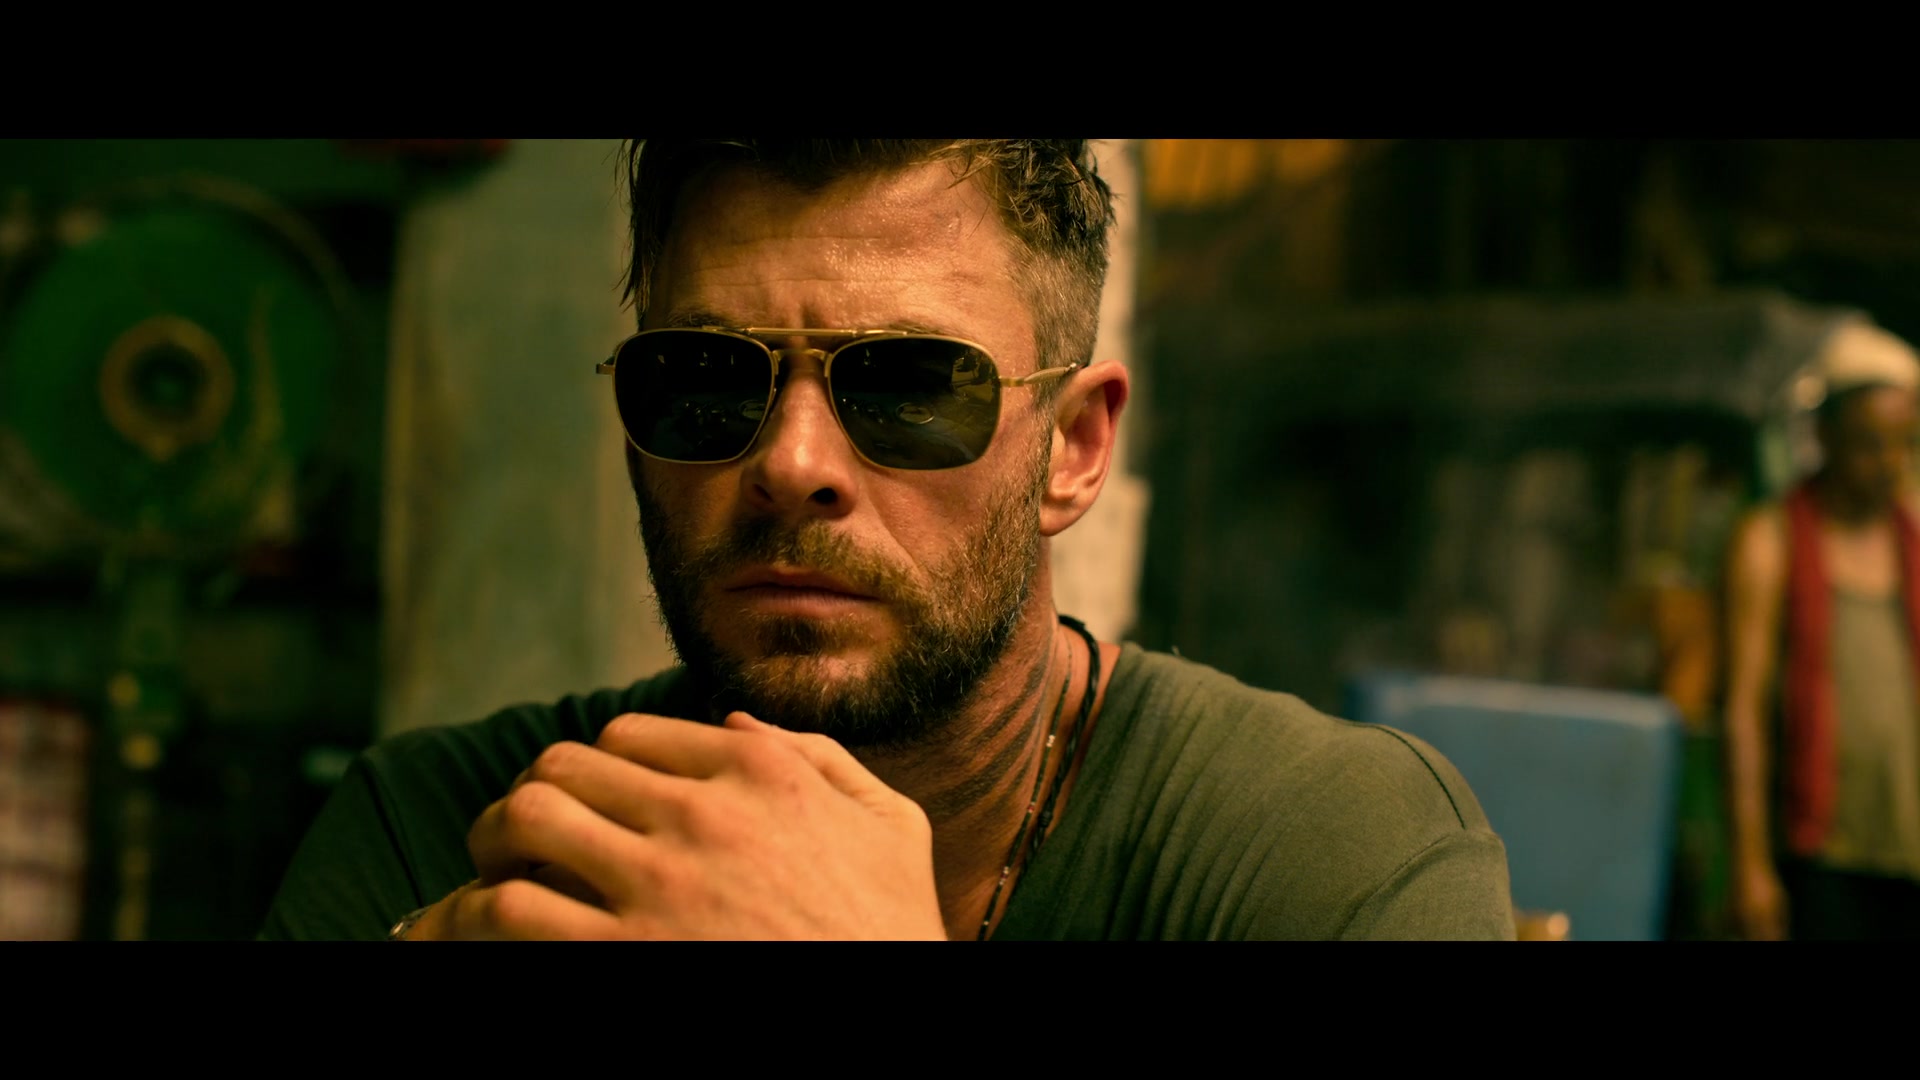 Aviator Sunglasses Worn by Chris Hemsworth as Tyler Rake in Netflix Movie Extraction